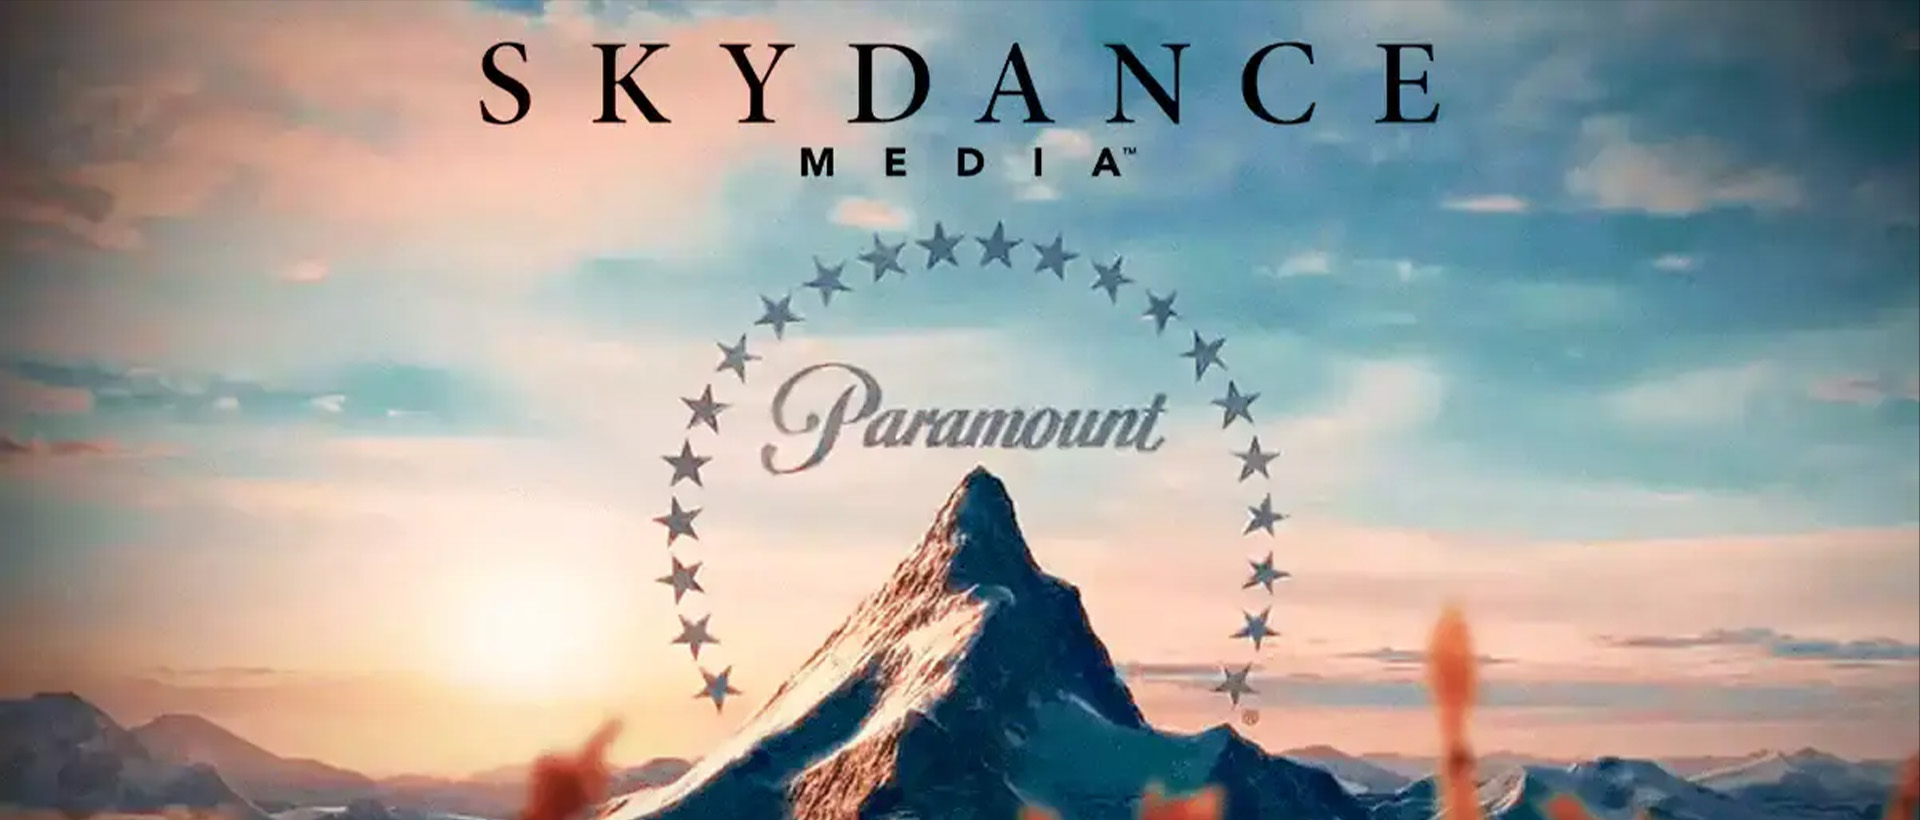 praamount skydance merger banner